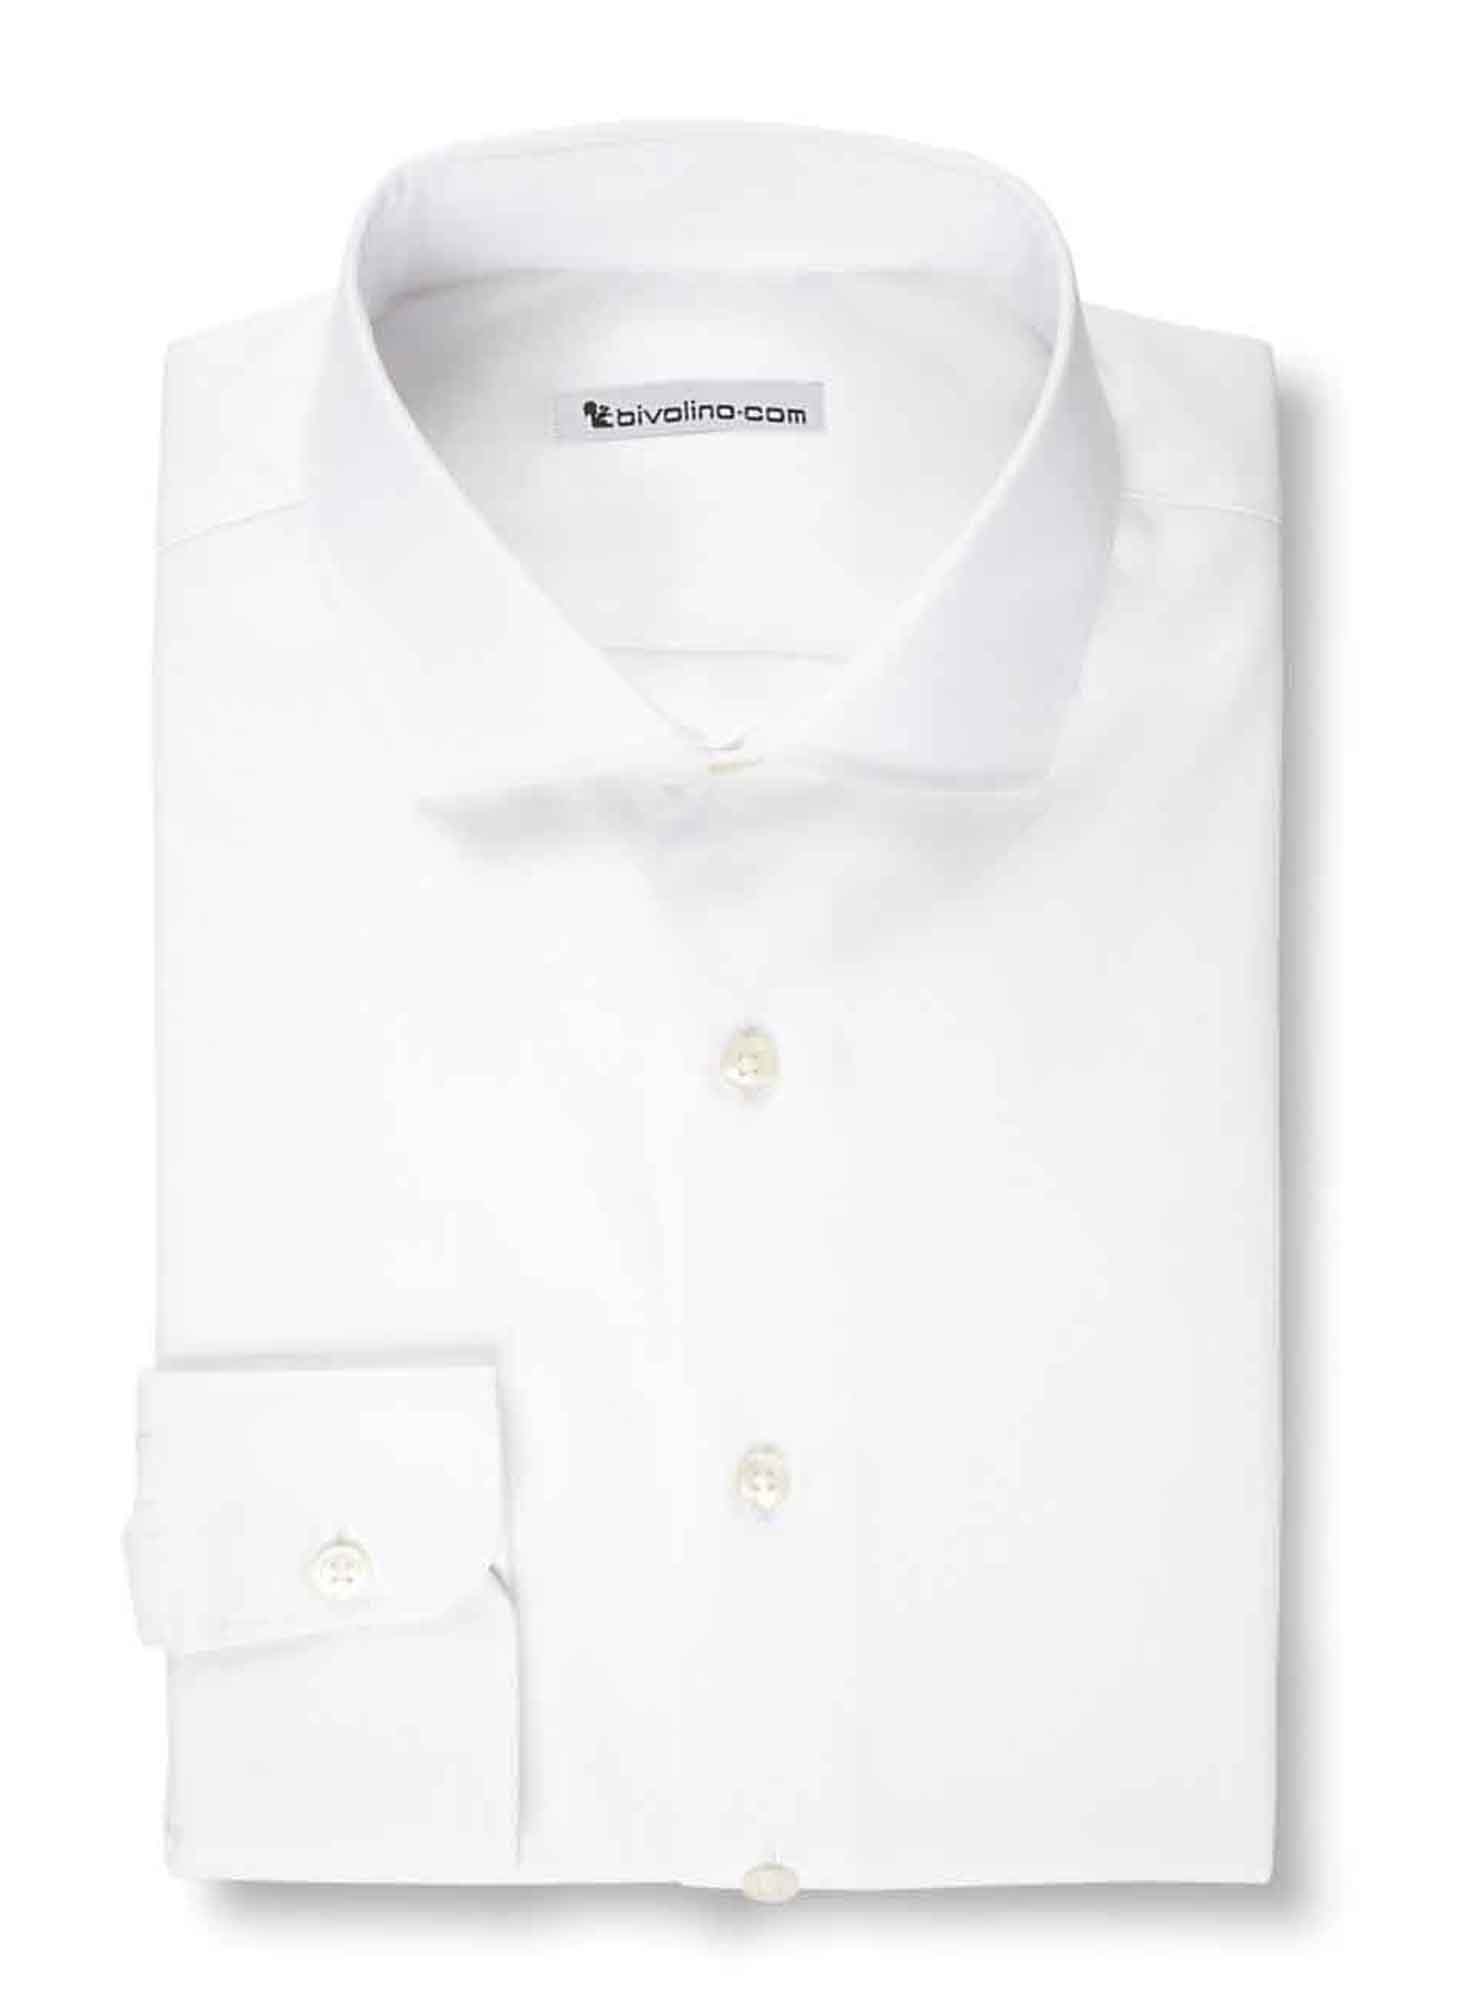 KIKILLIO - Camisa Pin-point blanca lisa - KIWI 1